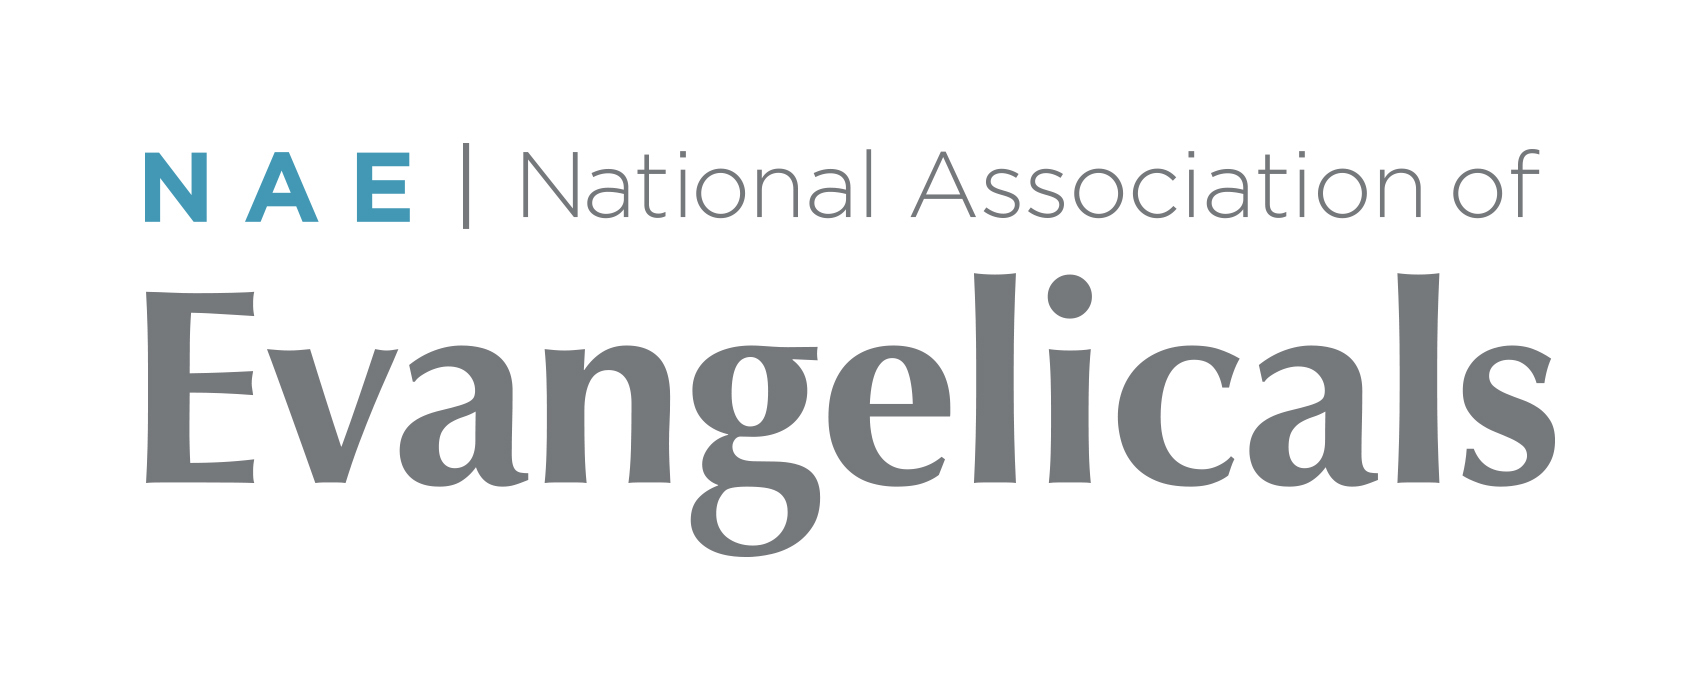 National Association of Evangelicals logo. Courtesy image